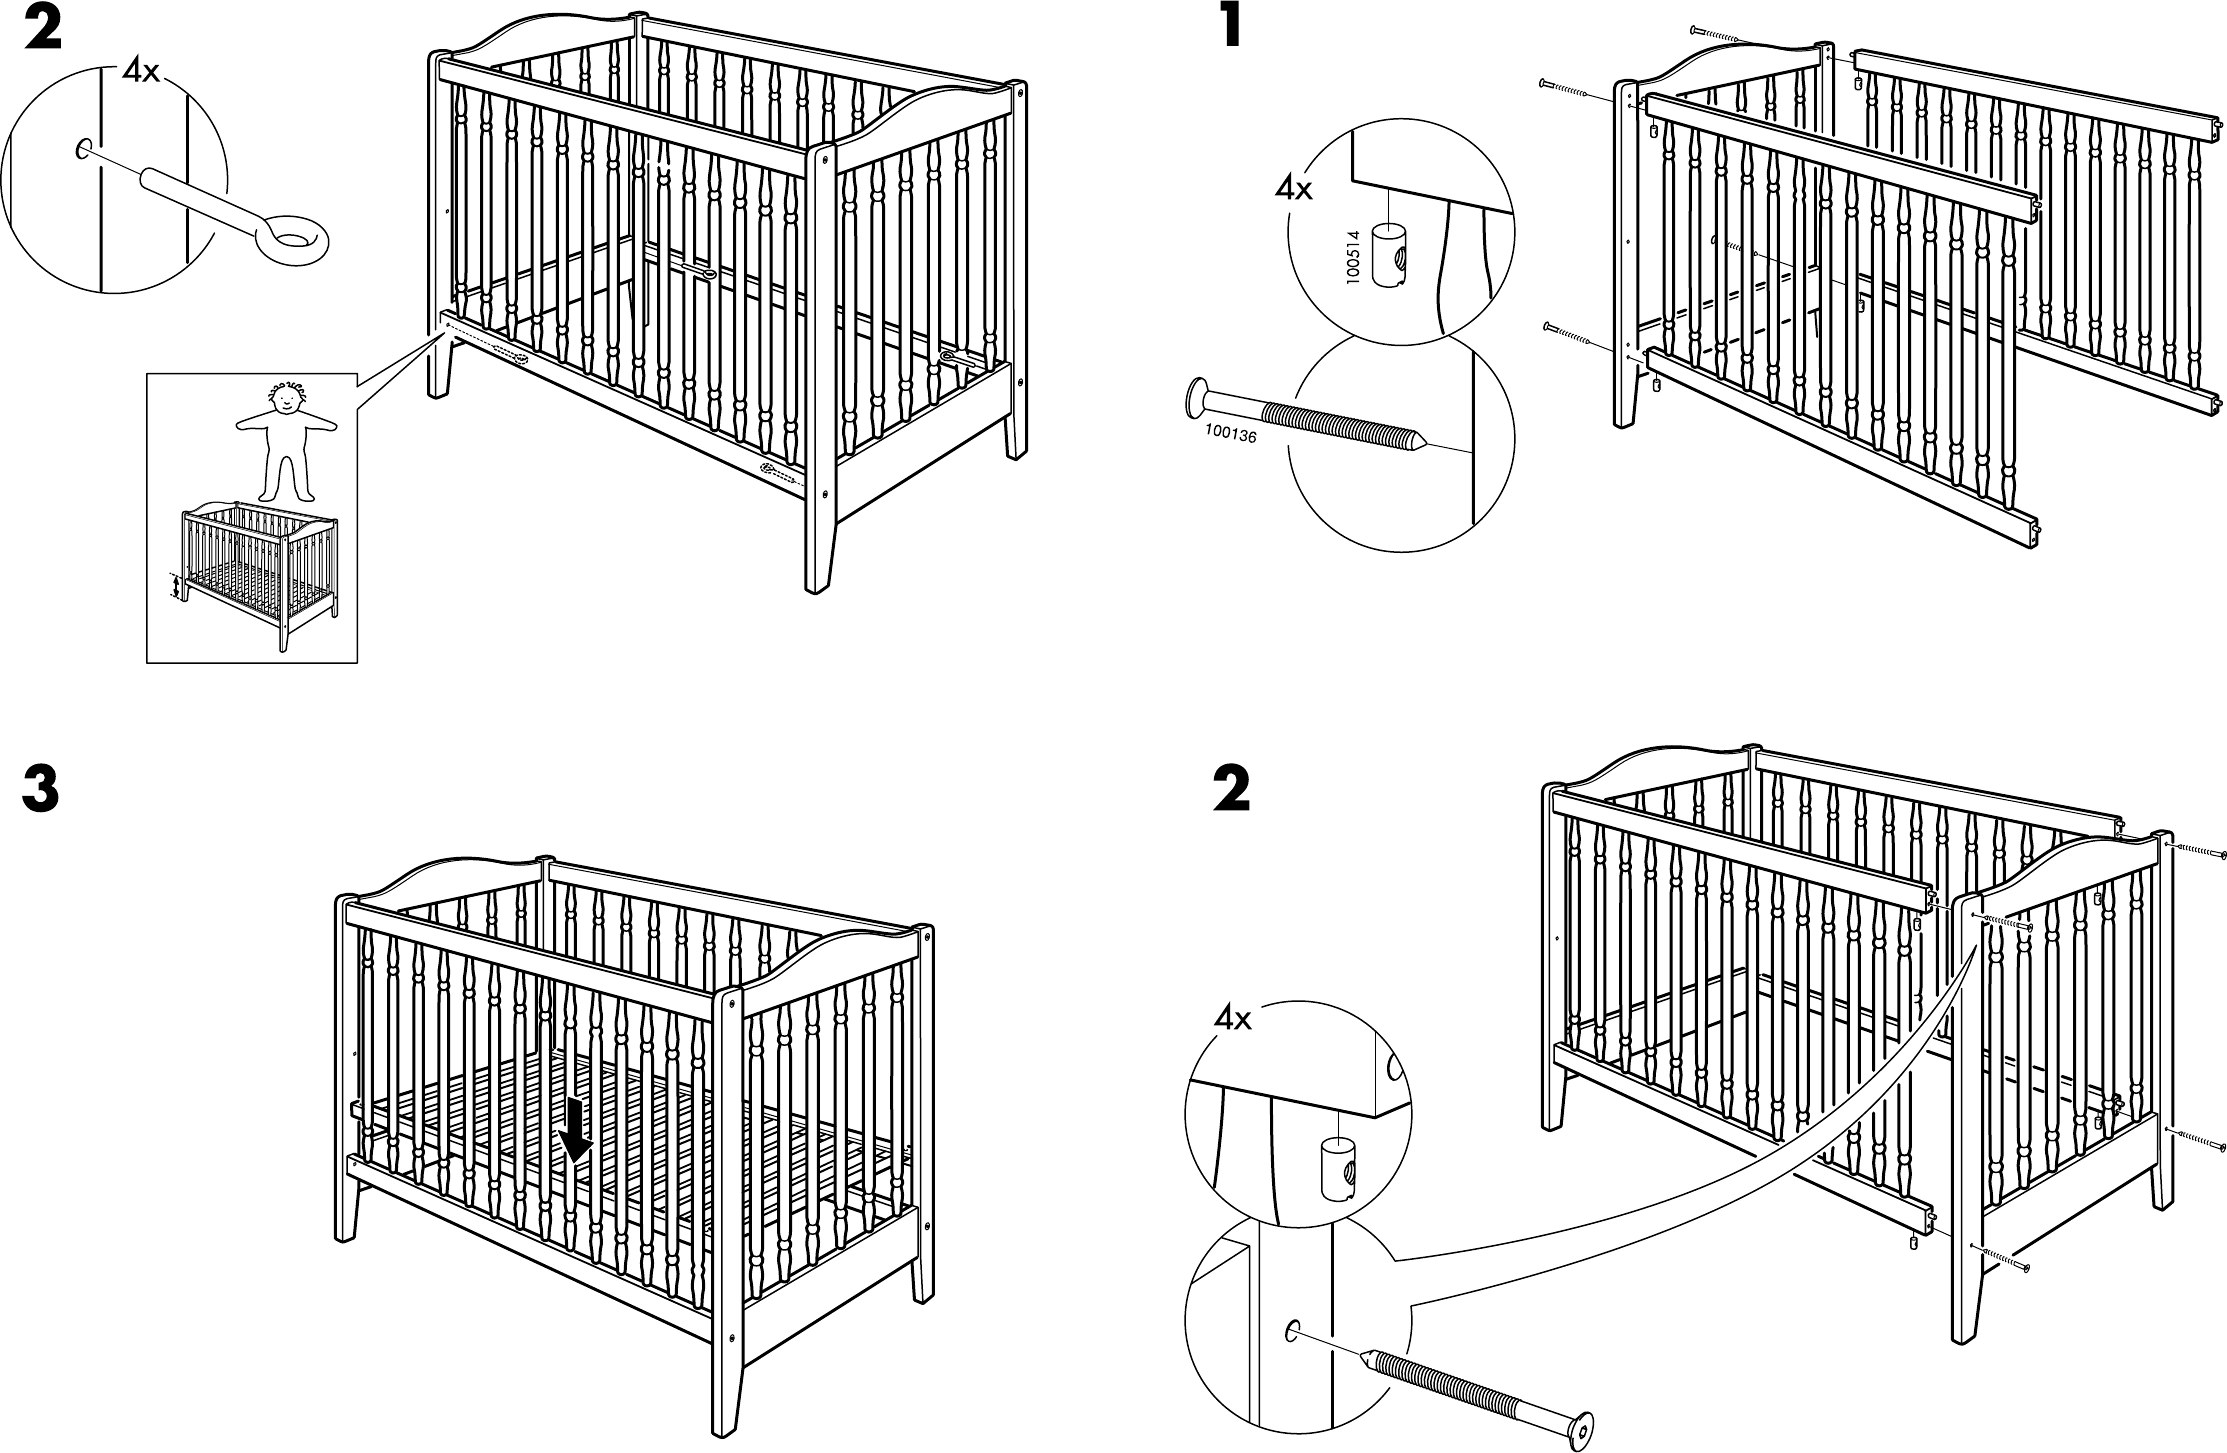 instruction guide for assembling cribs